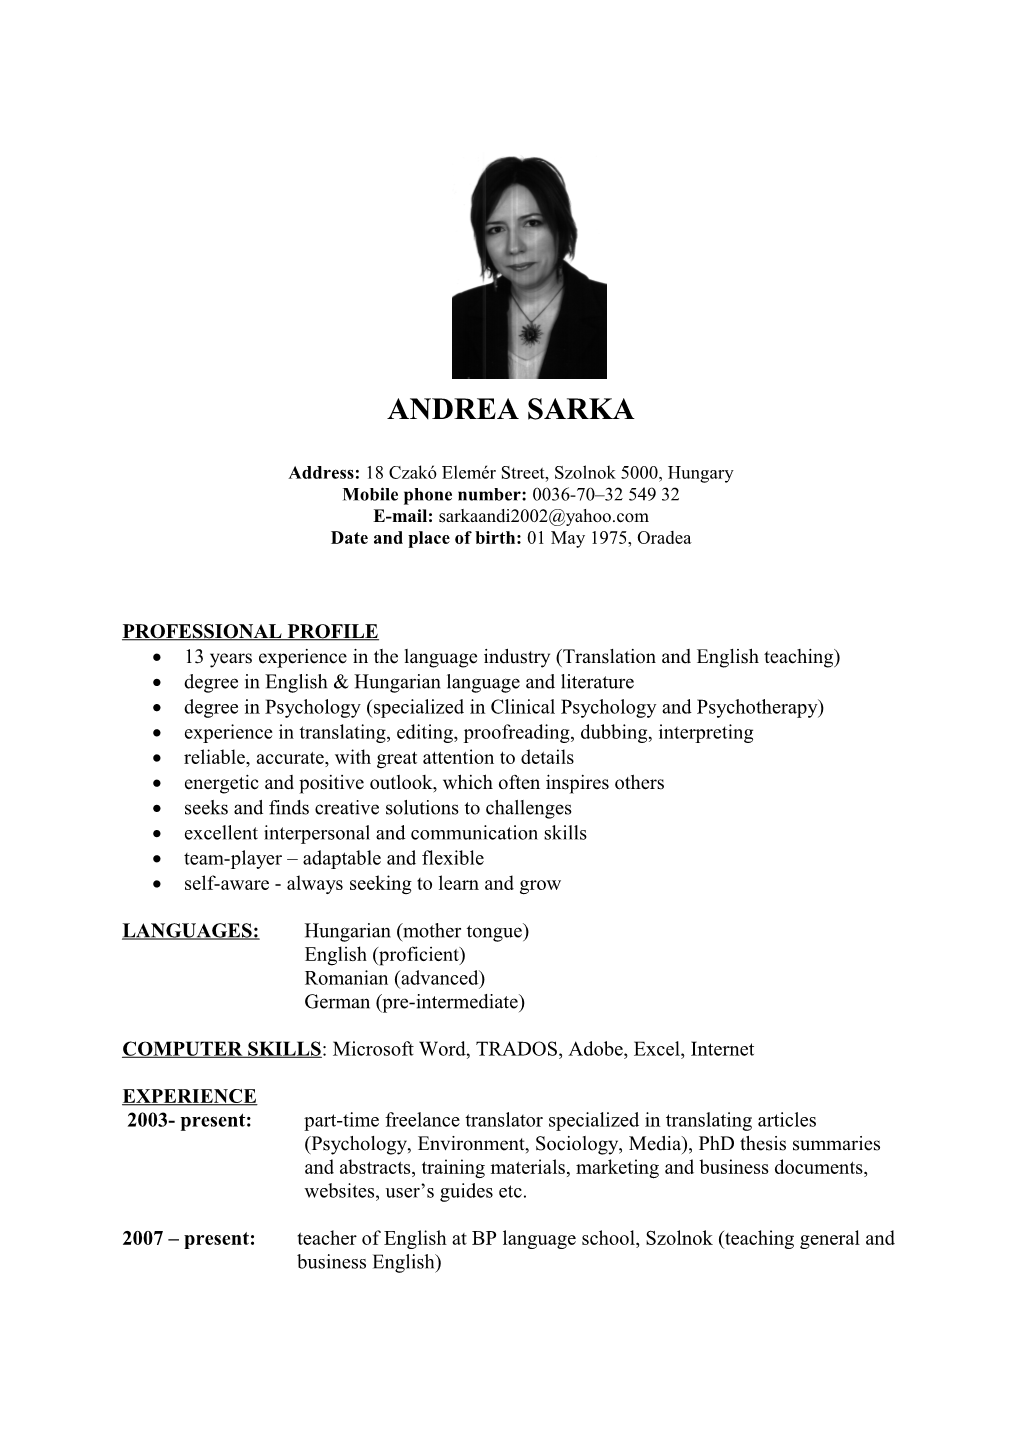 Sarka Andrea Curriculum Vitae